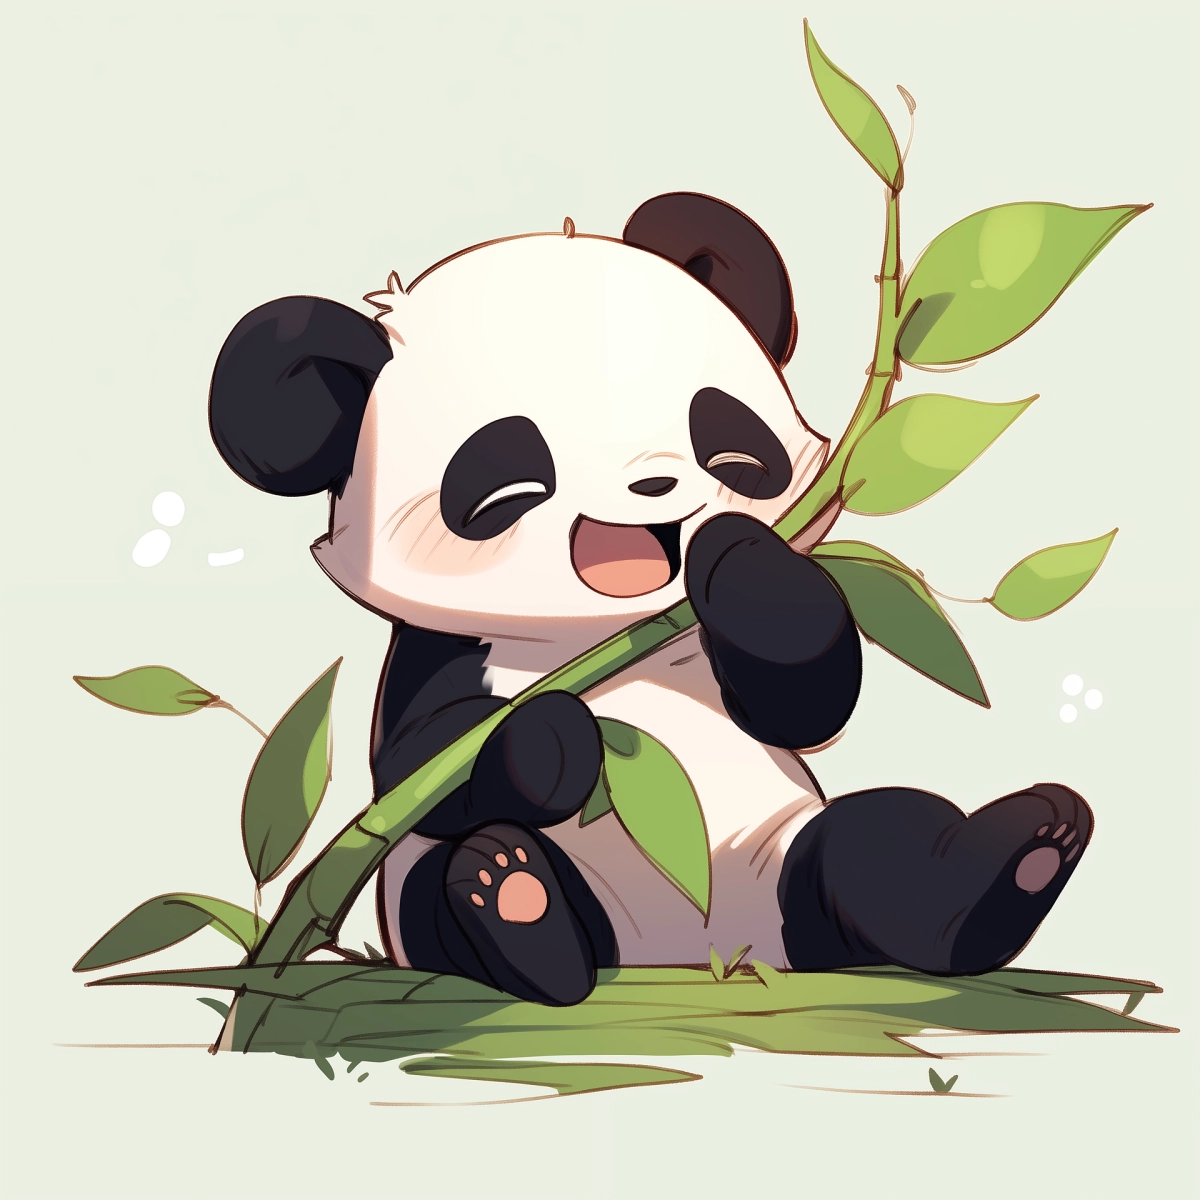 animal cute fond d ecran panda kawaii dessin bambou feuilles vertes